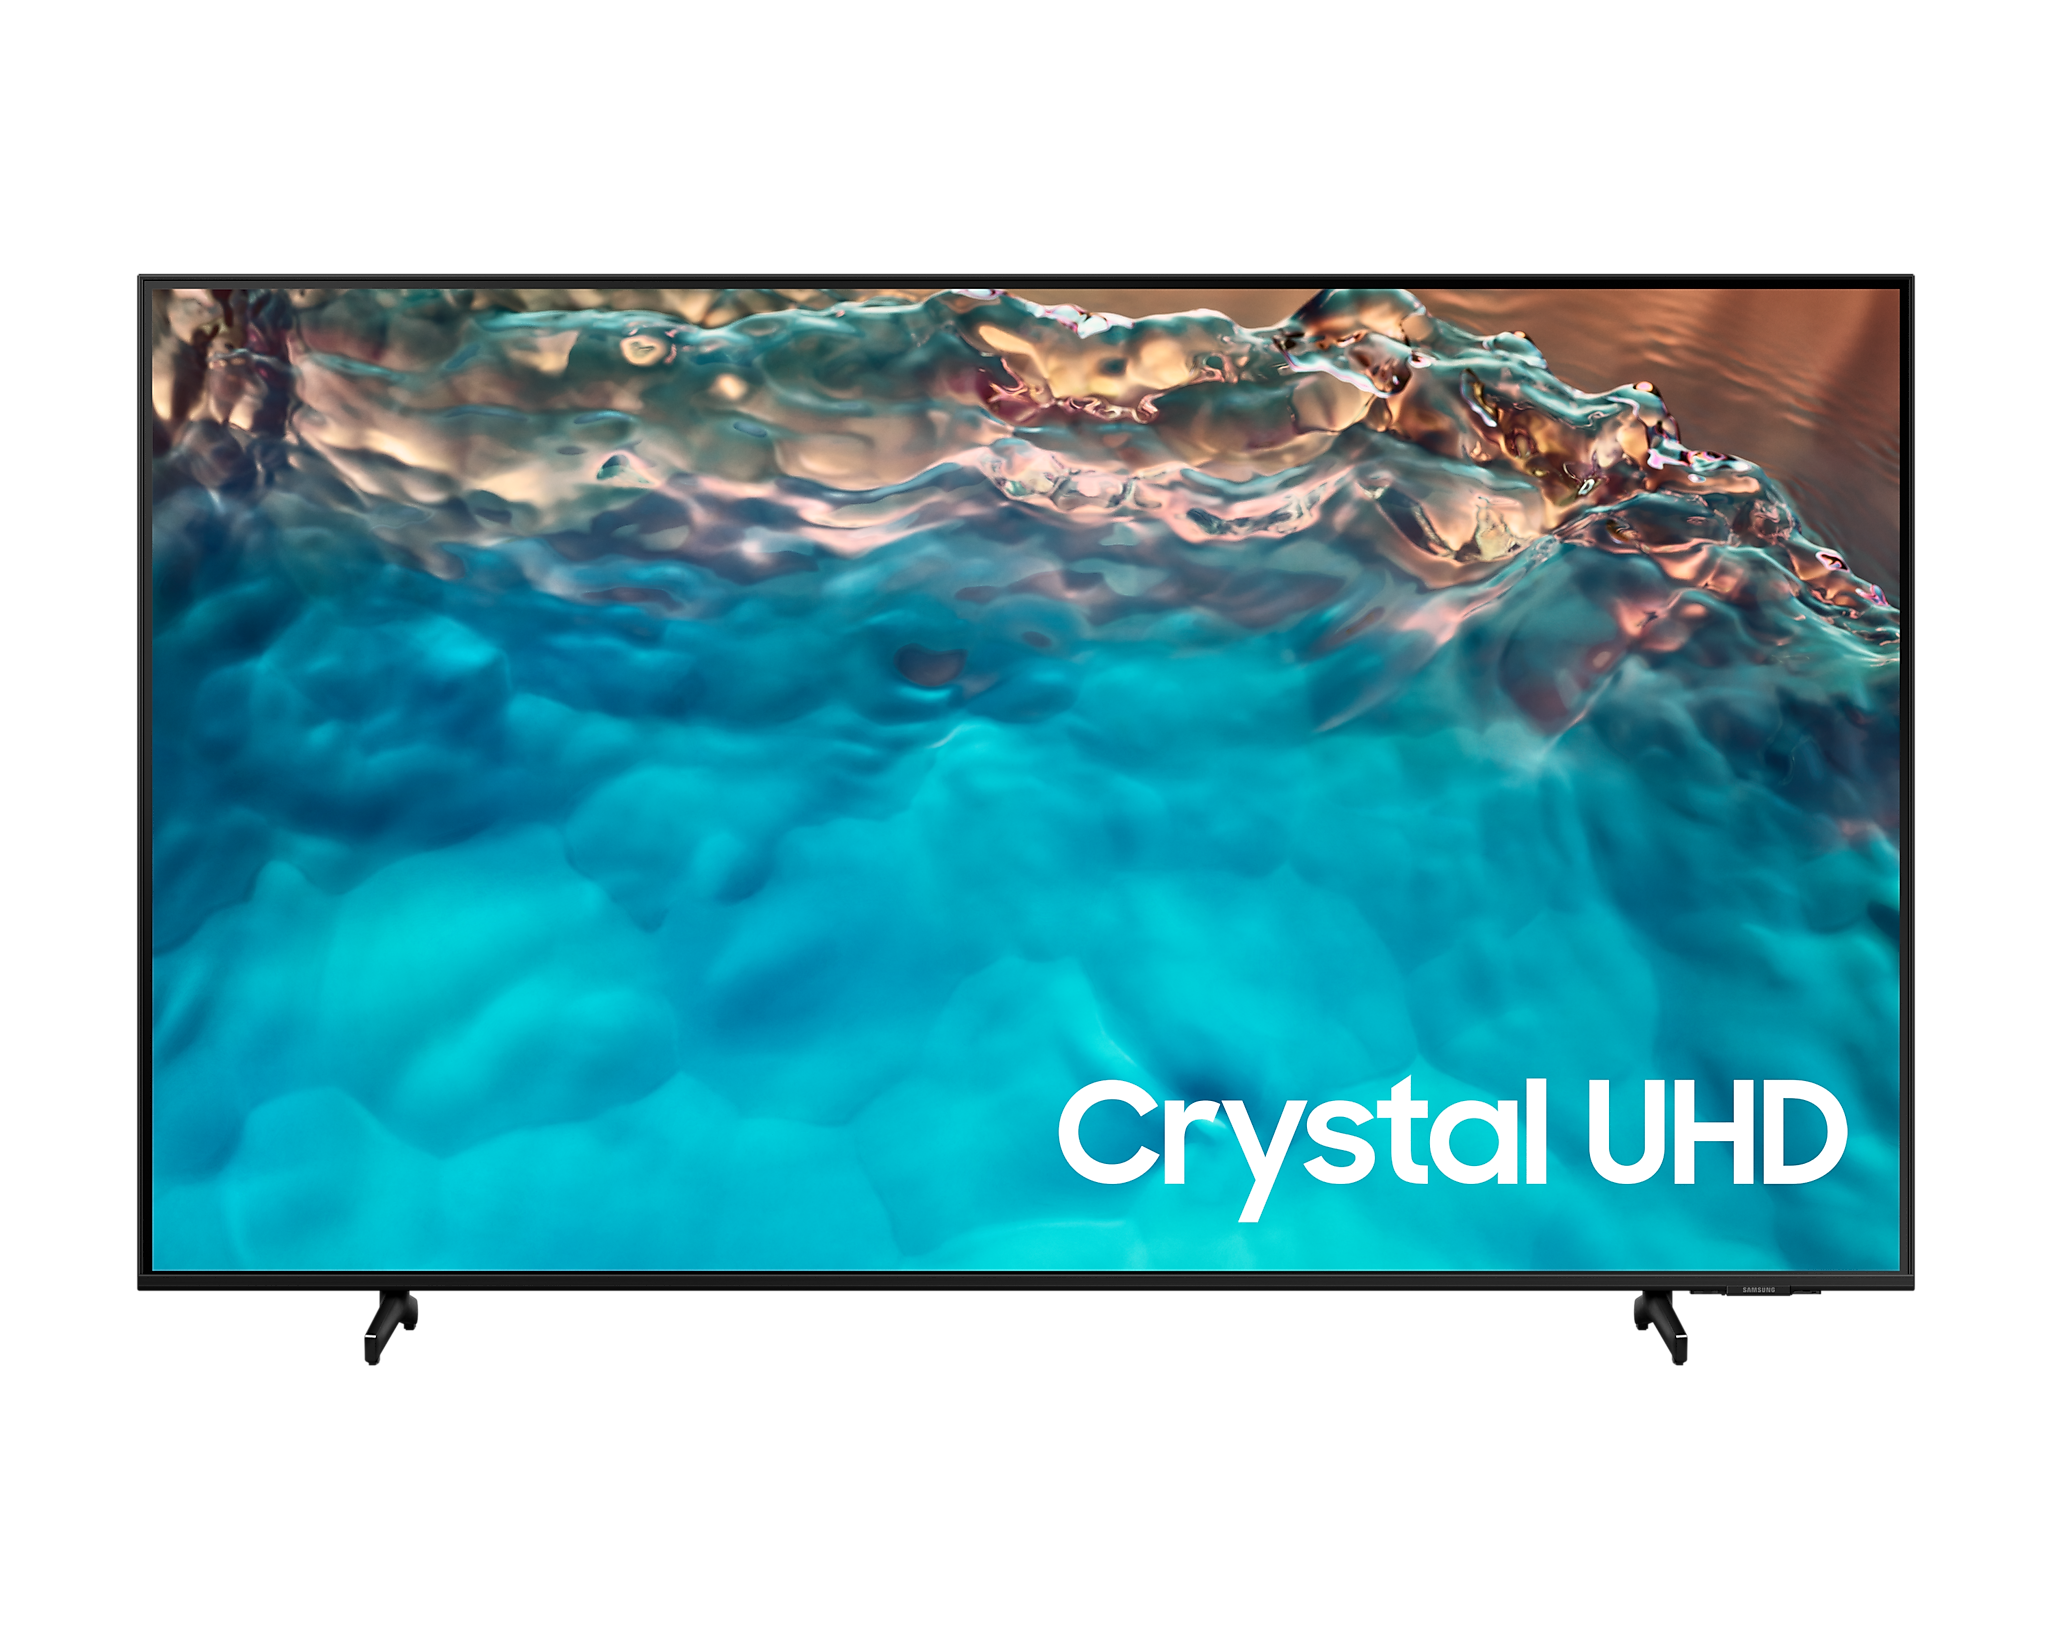 1m 25cm (50″) BU8000 Crystal 4K UHD Smart TV